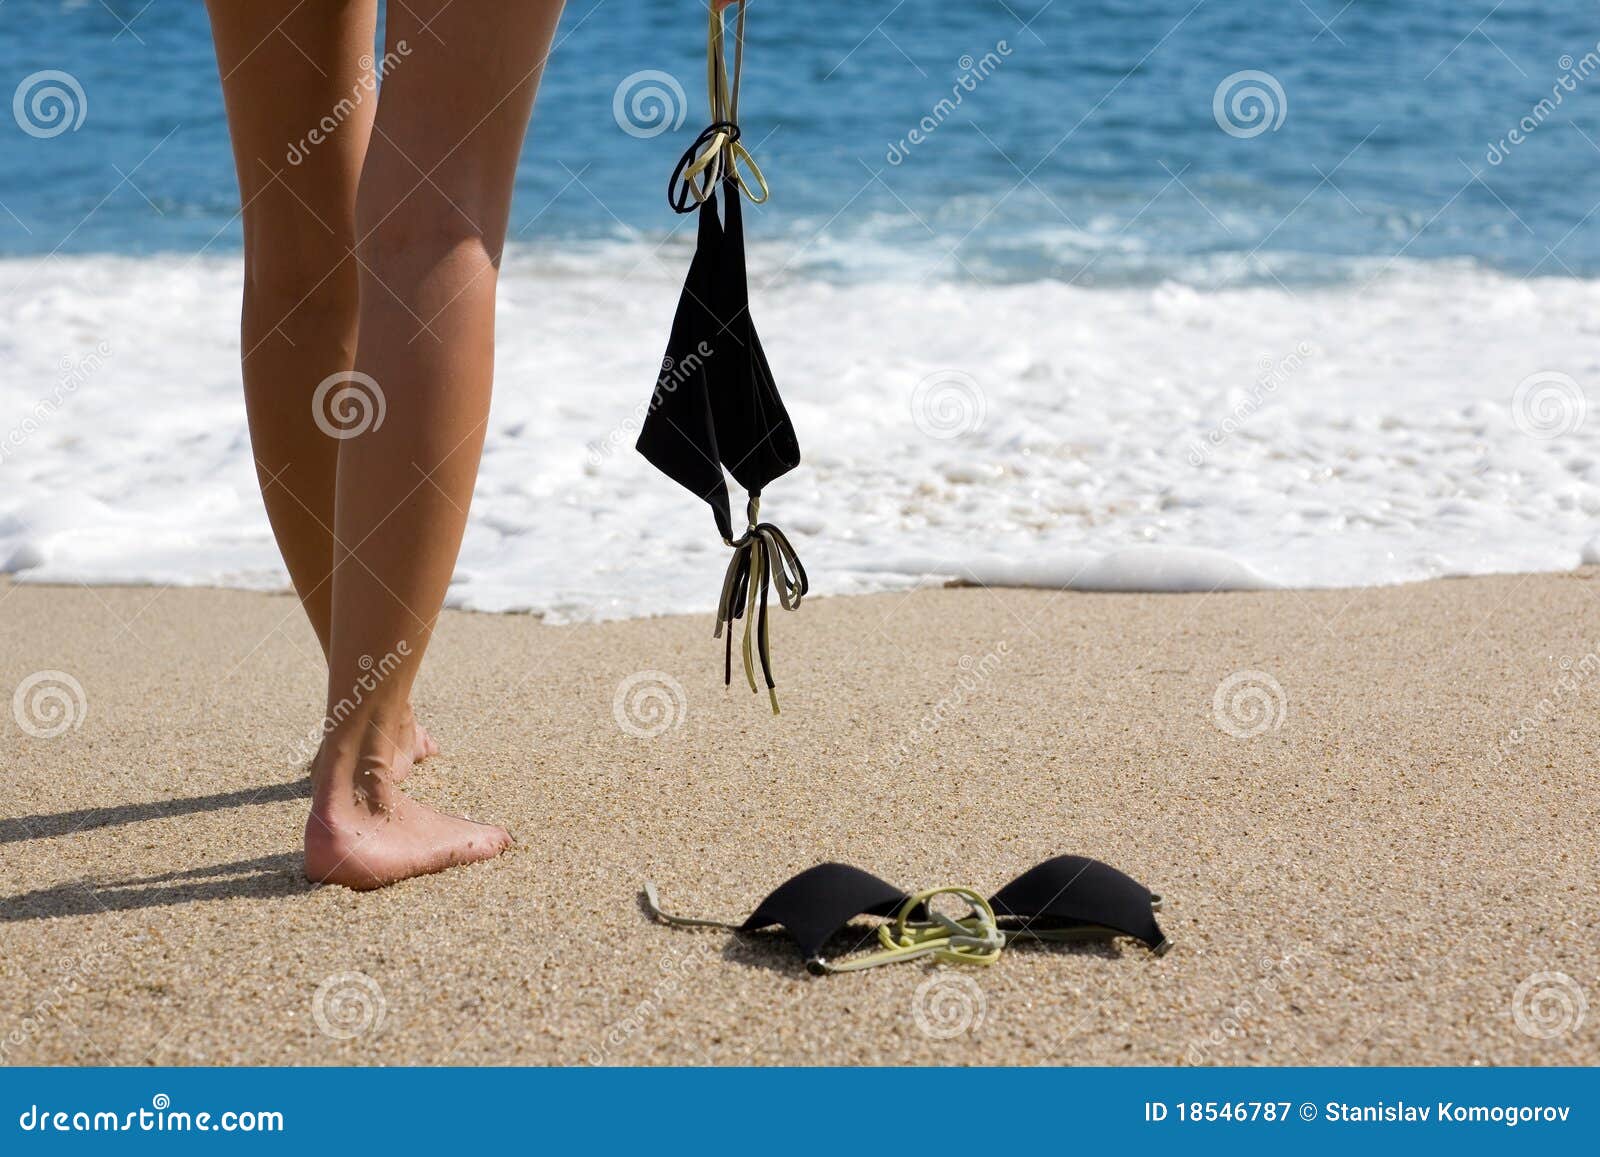 Young Woman Takes Off Bikini Stock Image - Image of shore, carefree:  18546787